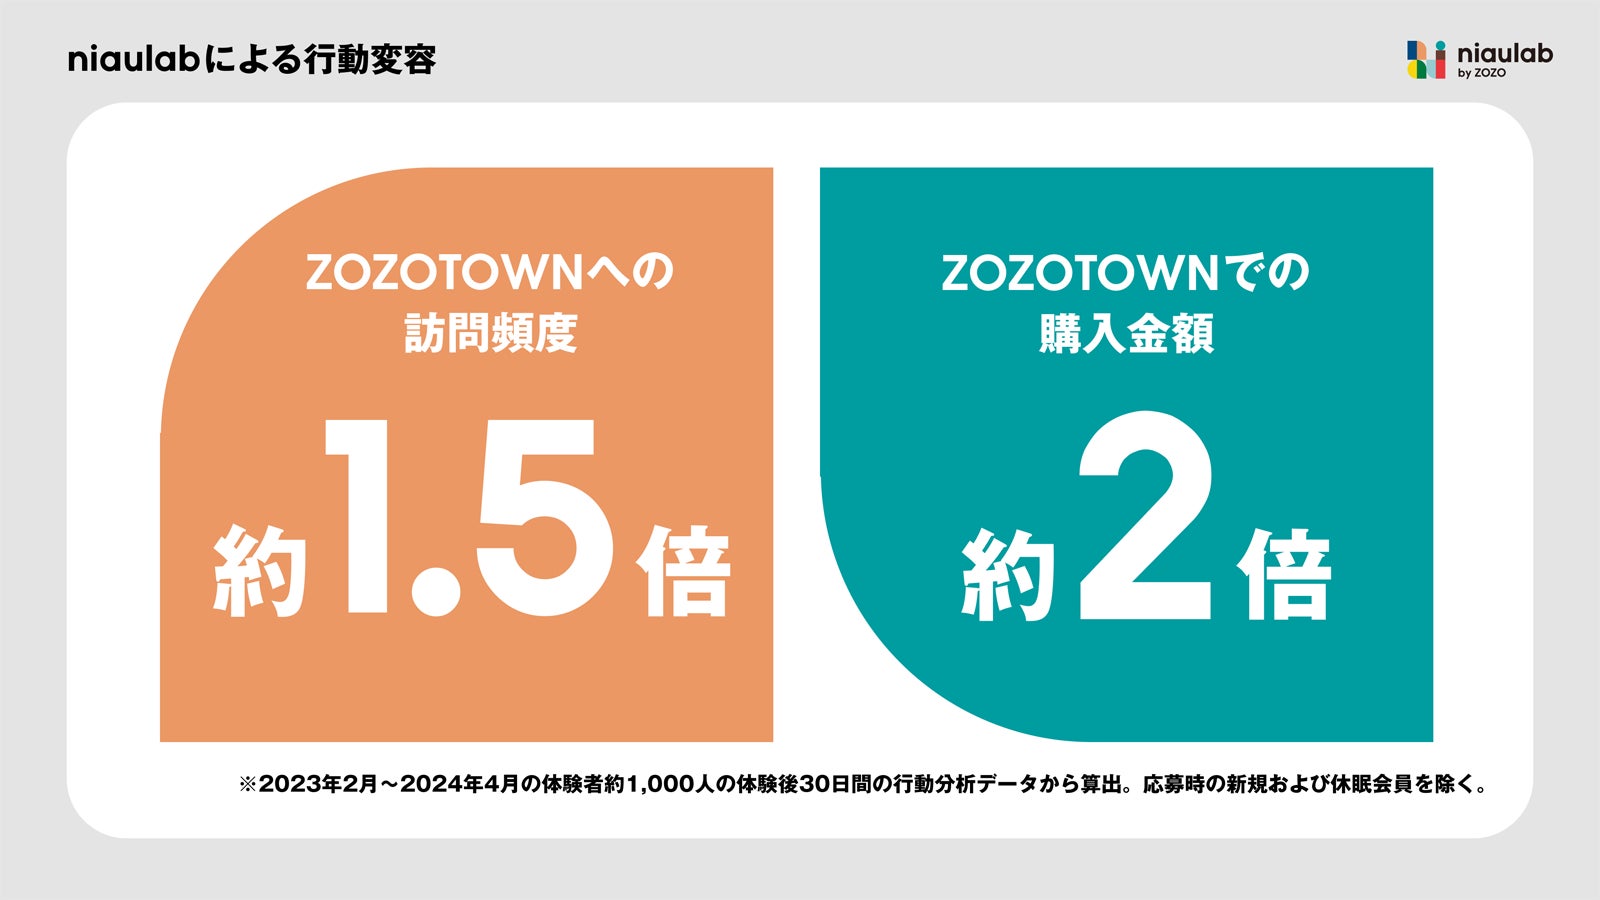 ZOZOの超パーソナルスタイリング体験施設「niaulab by ZOZO」 体験者のZOZOTOWNへの訪問頻度が約1.5倍、購入...